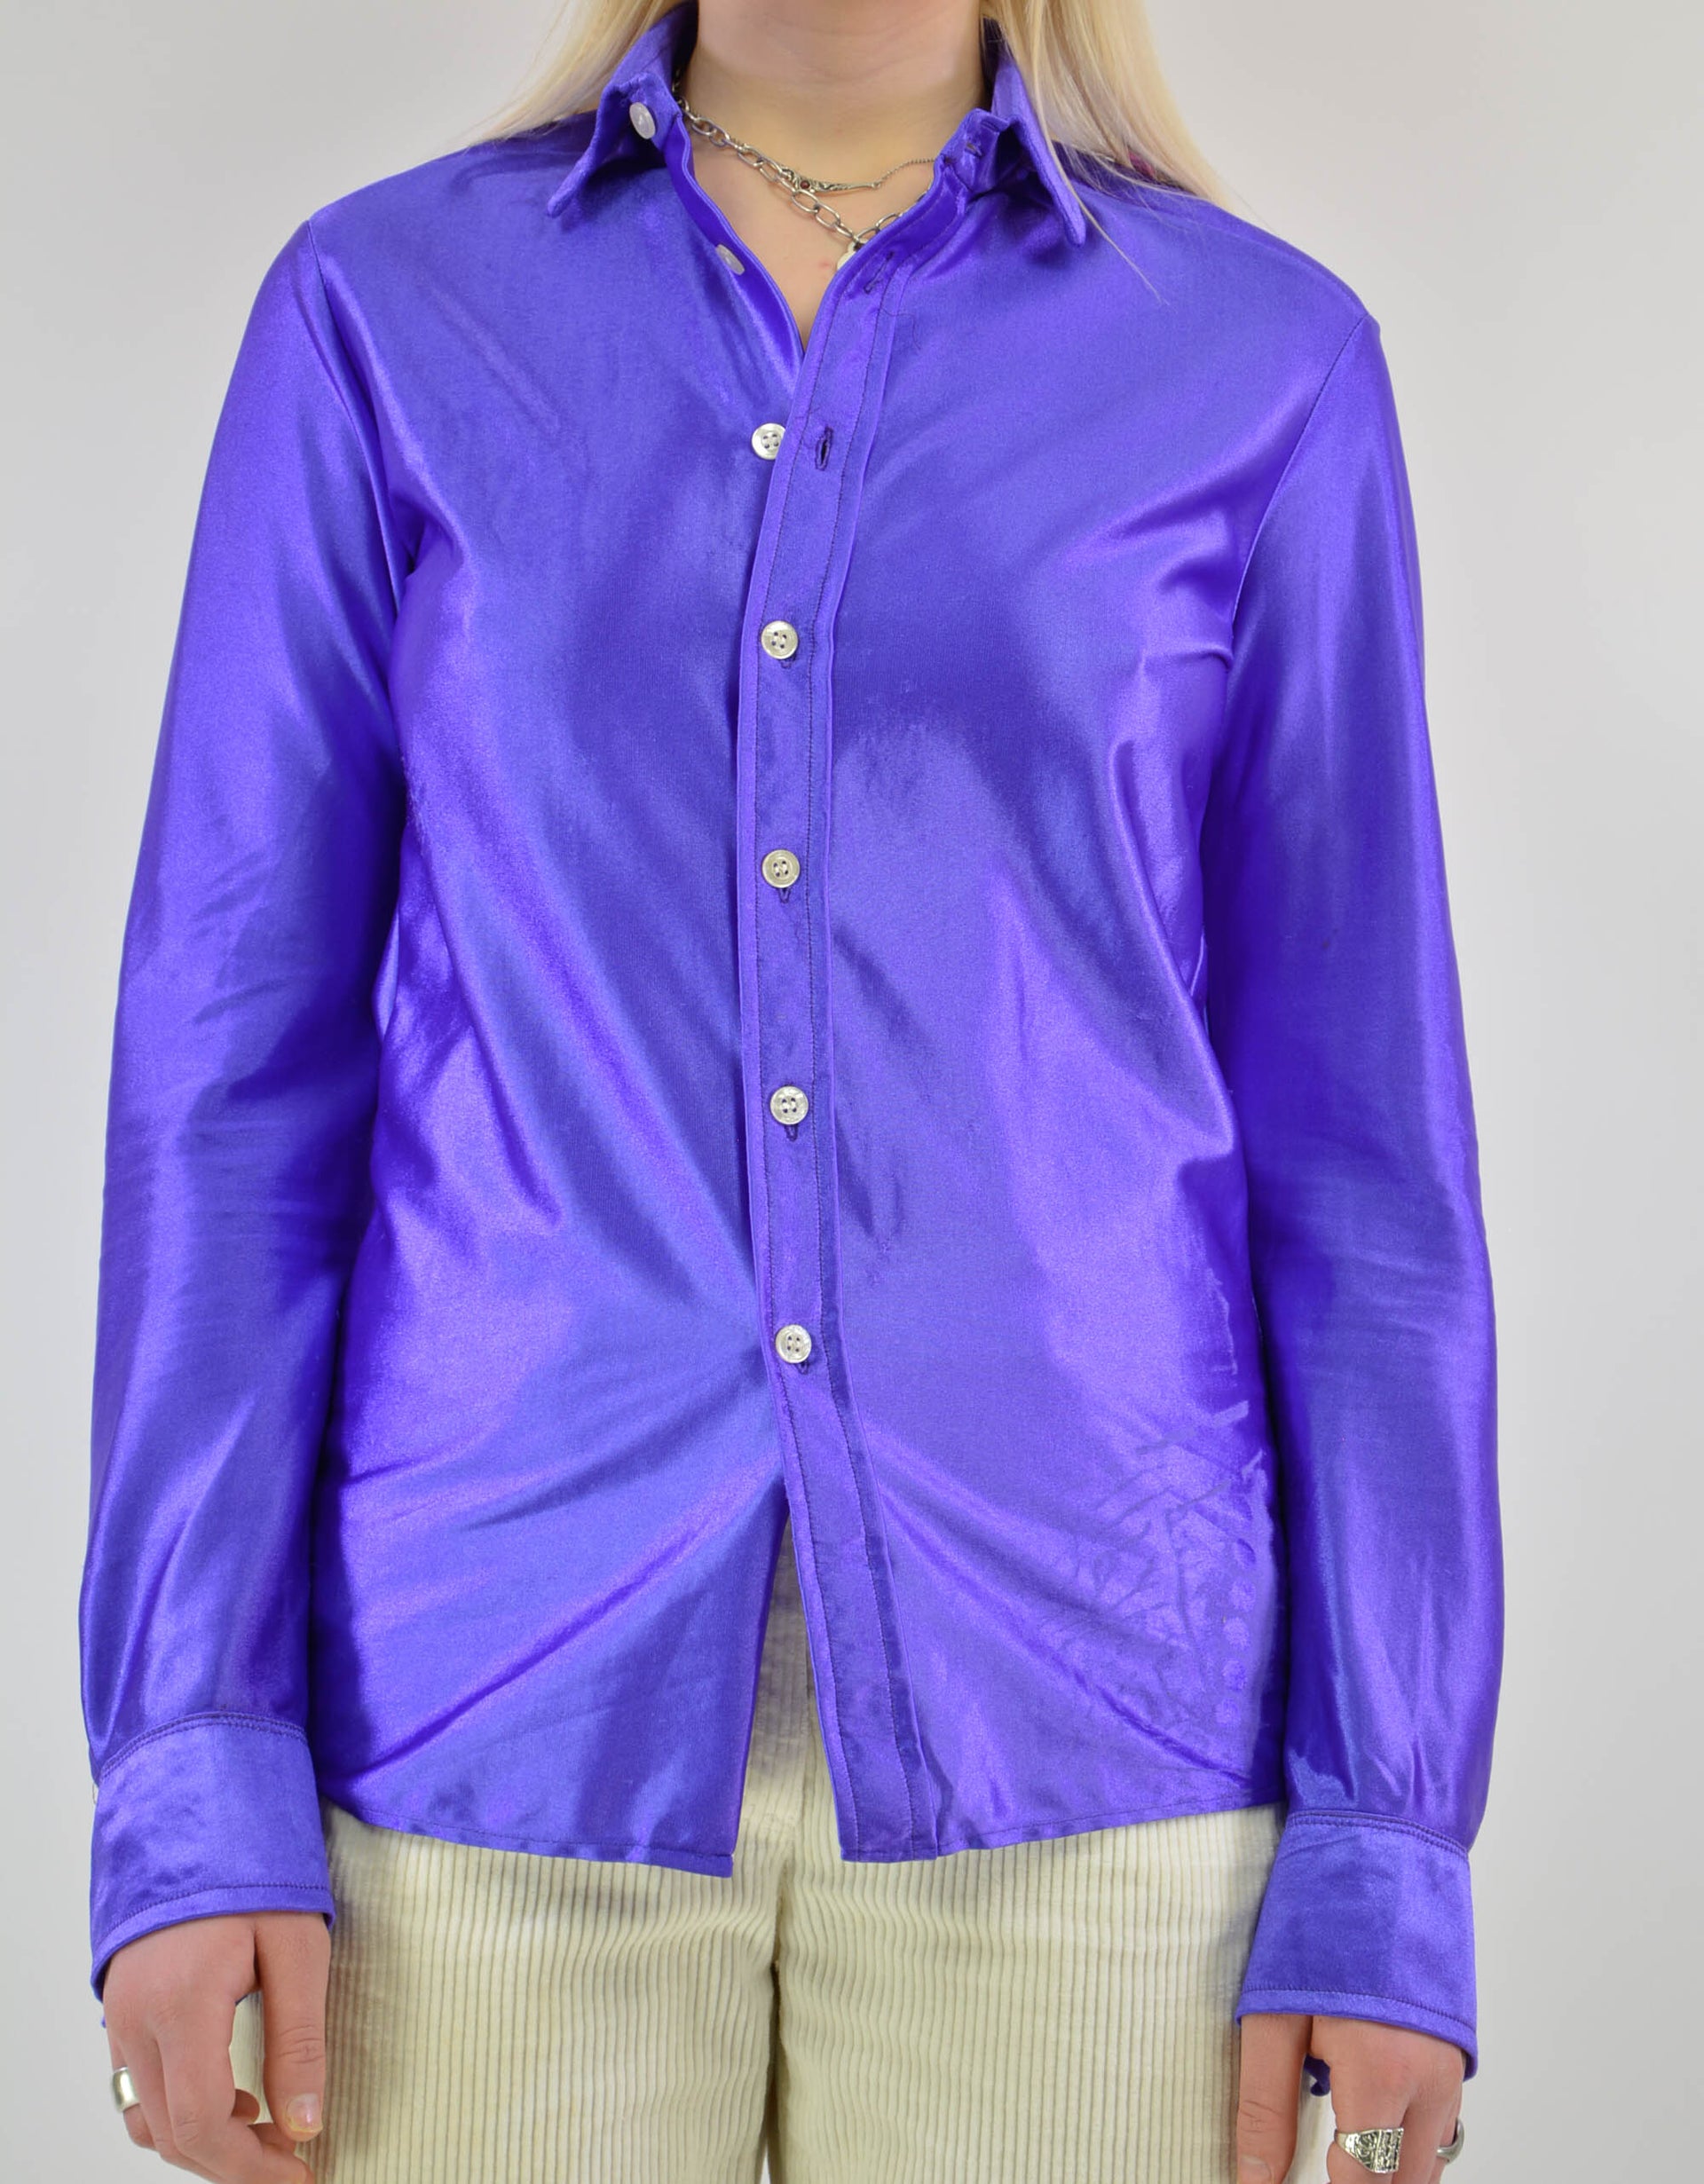 90s purple shirt - PICKNWEIGHT - VINTAGE KILO STORE